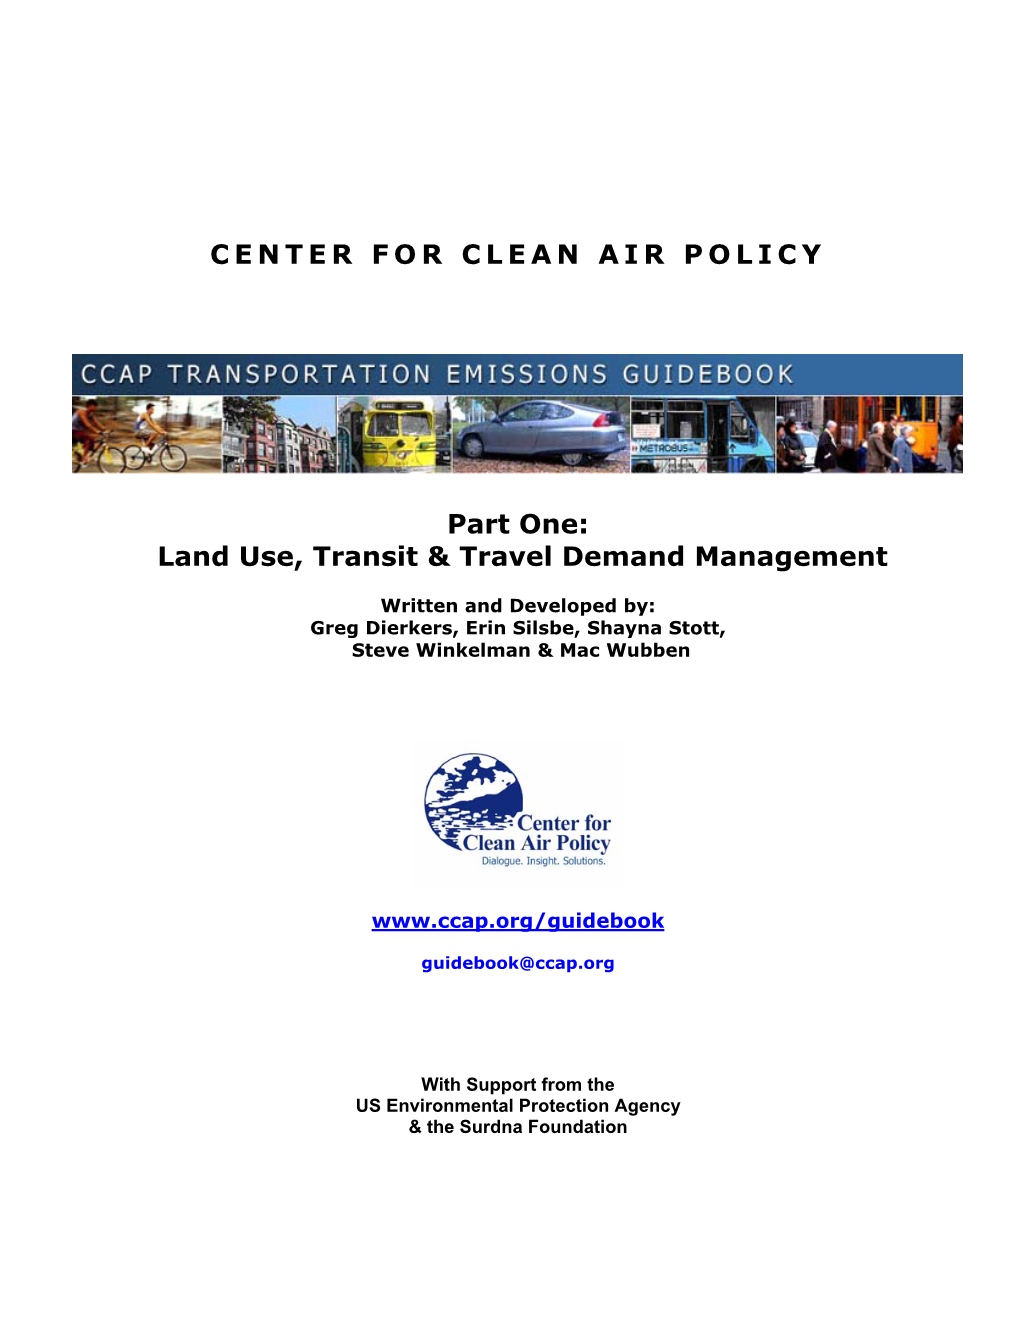 CCAP Transportation Emissions Guidebook Part One: Land Use, Transit & Travel Demand Management